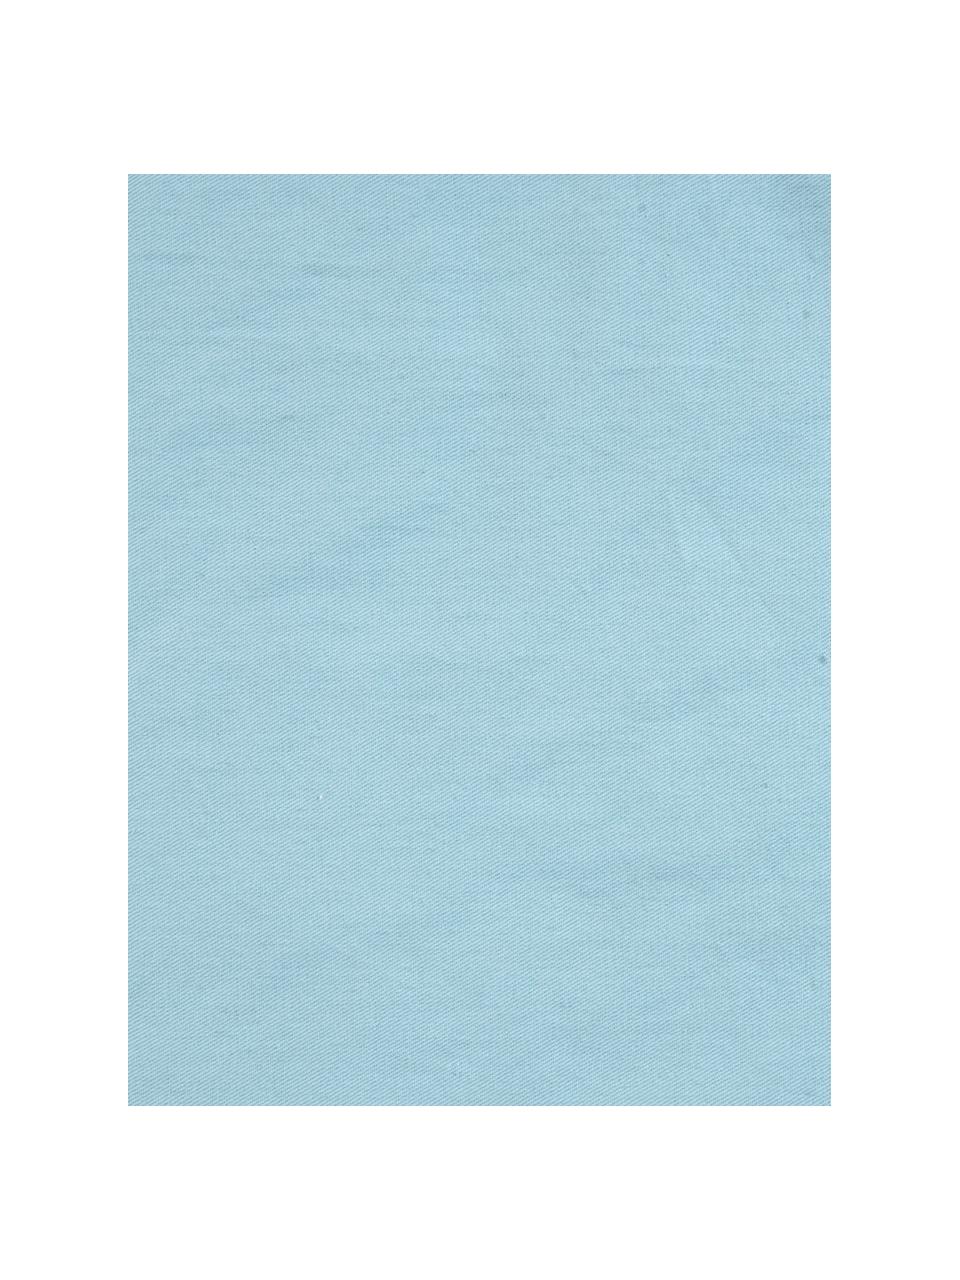 Baumwoll-Kissenhülle Reef mit getuftetem Motiv, 100% Baumwolle, Hellblau, Weiss, B 40 x L 40 cm